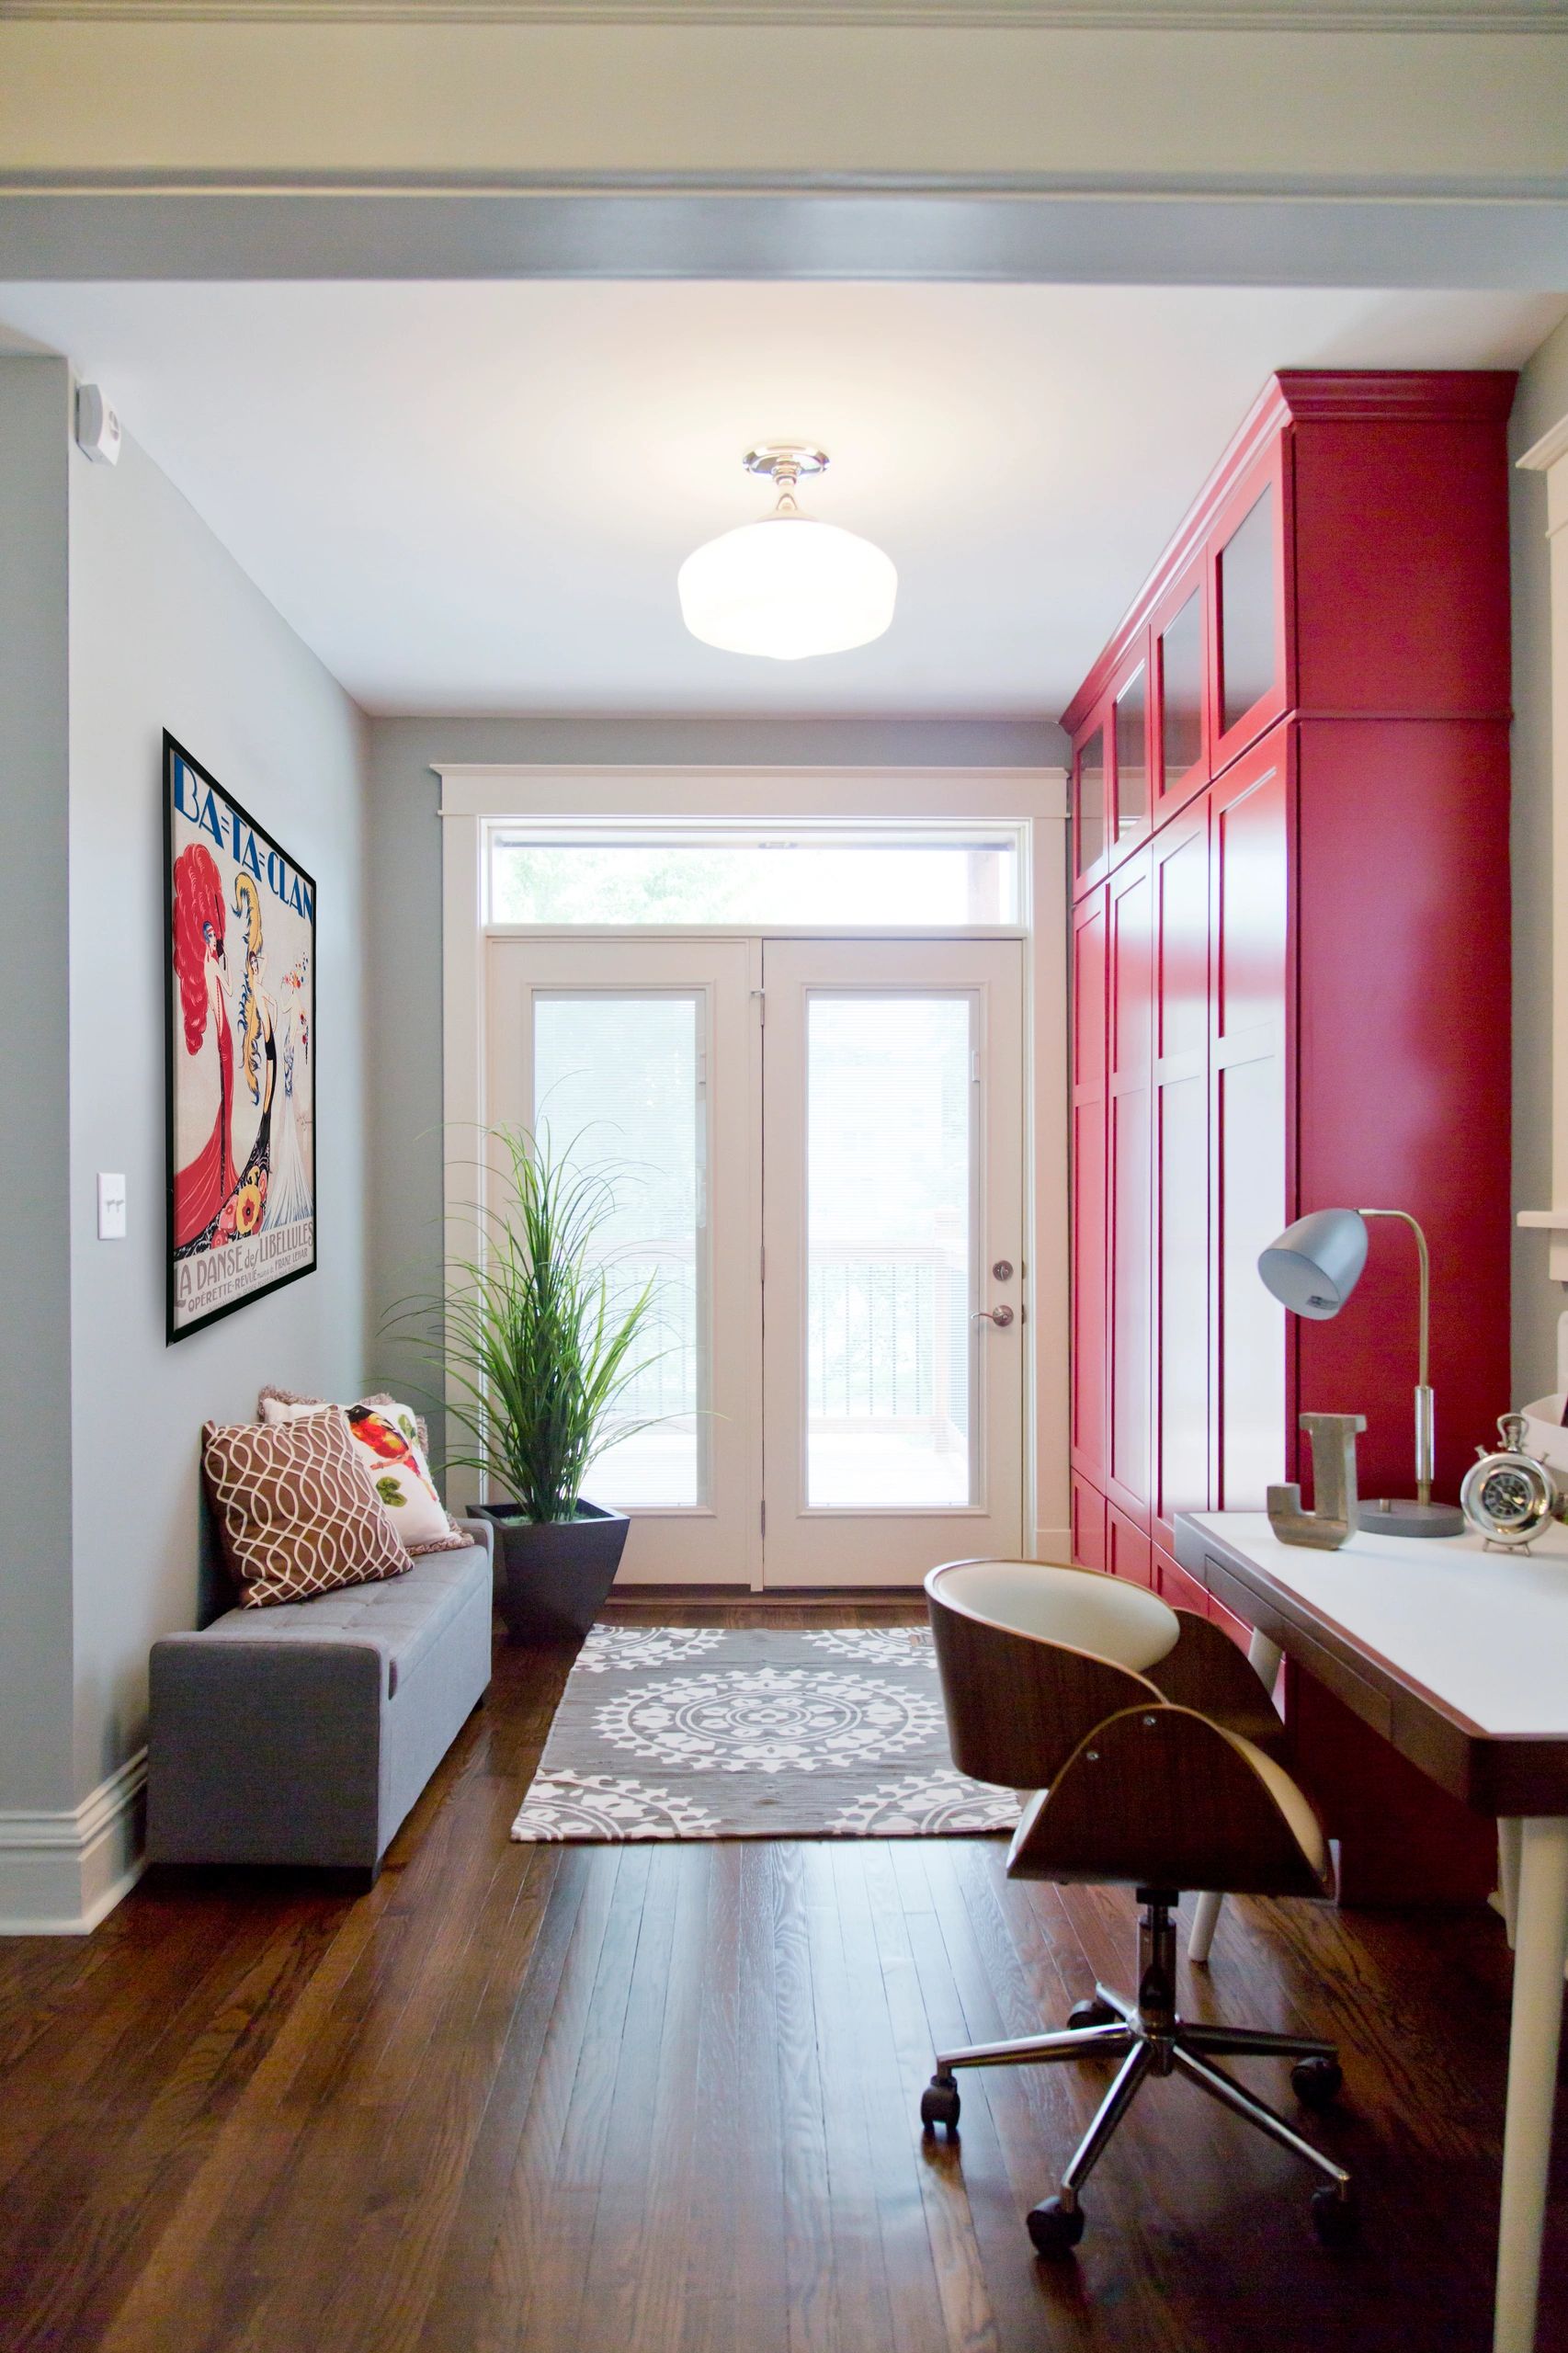 A home's efficient interior design